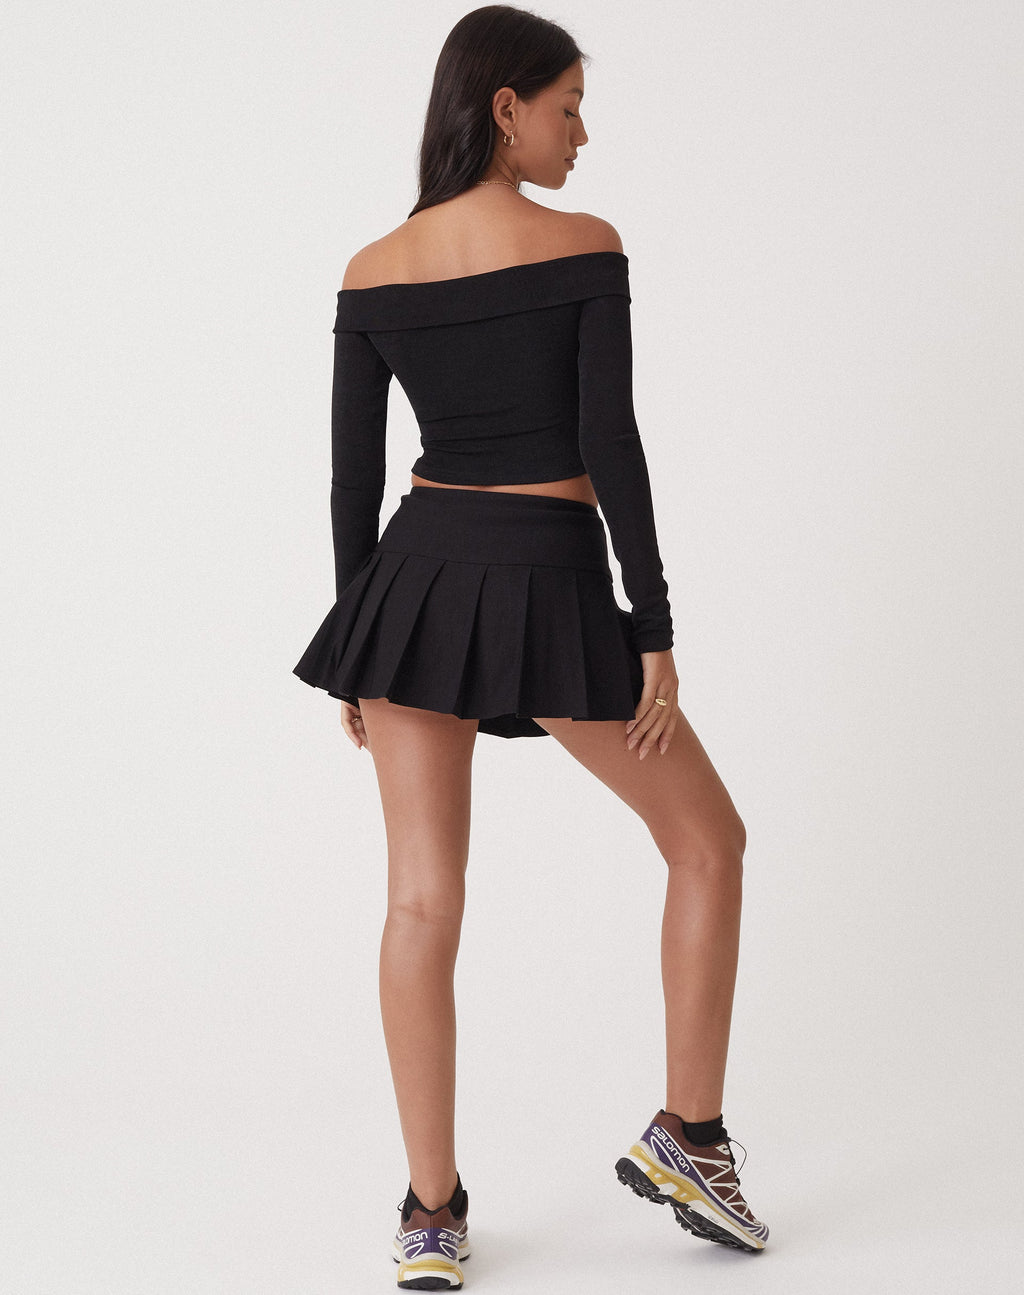 MOTEL X OLIVIA NEILL Casini Pleated Micro Skirt in Tailoring Black